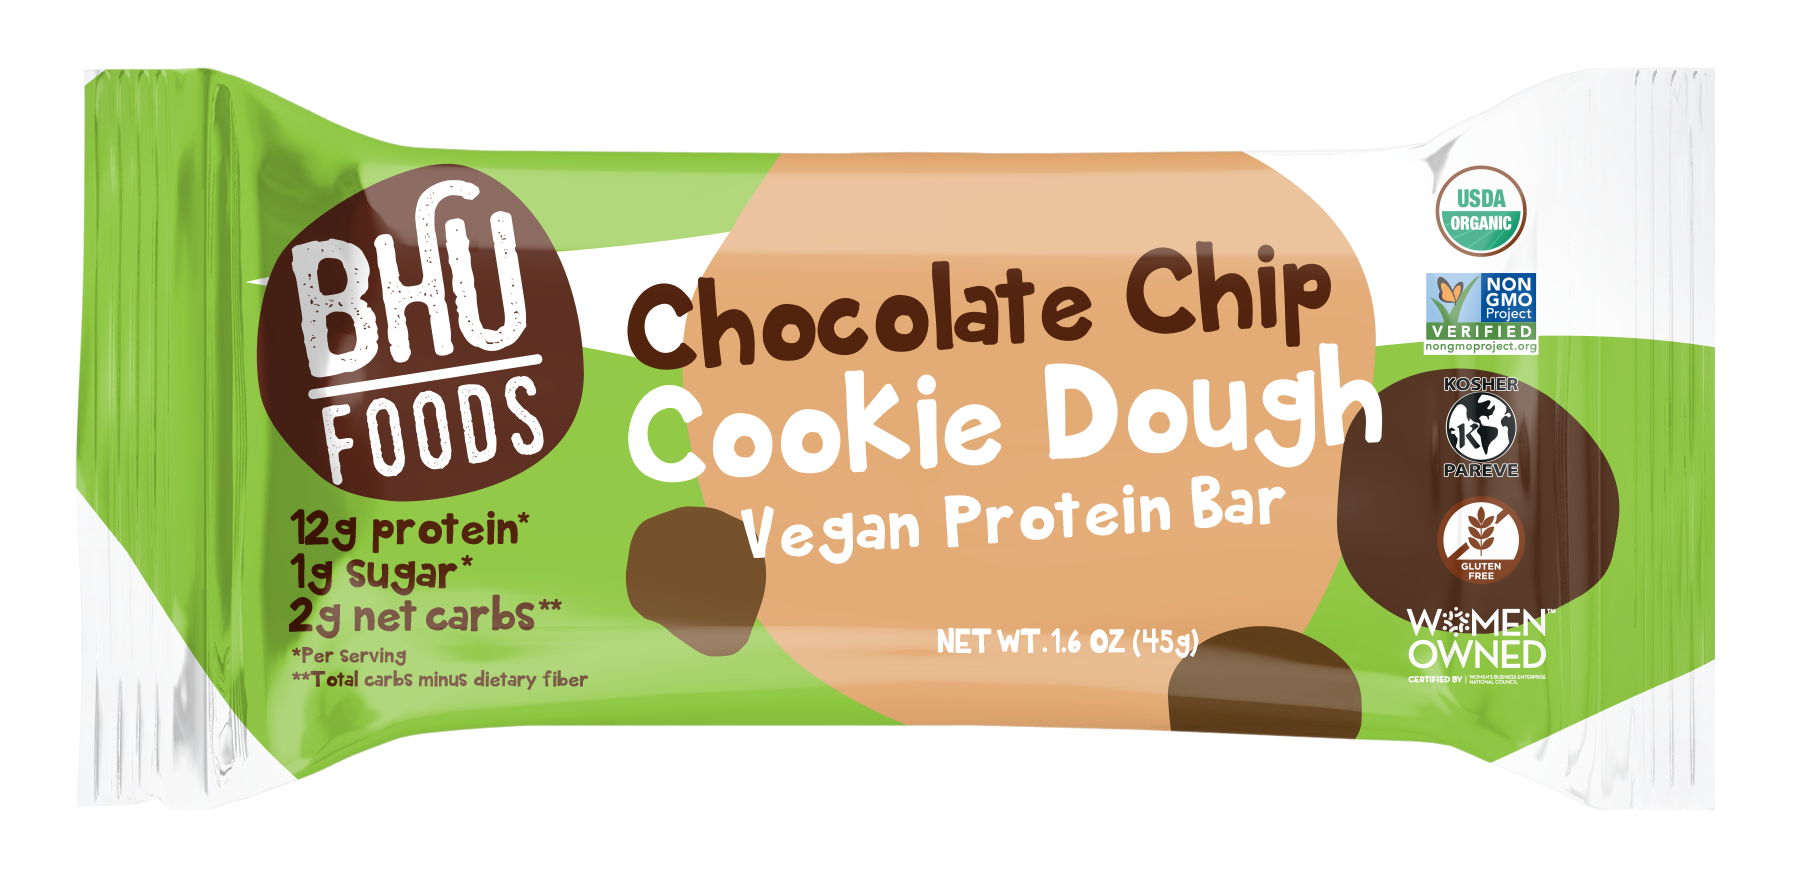 BHU Foods Vegan Protein Bar - Chocolate Chip Cookie Dough 12 innerpacks per case 19.0 oz